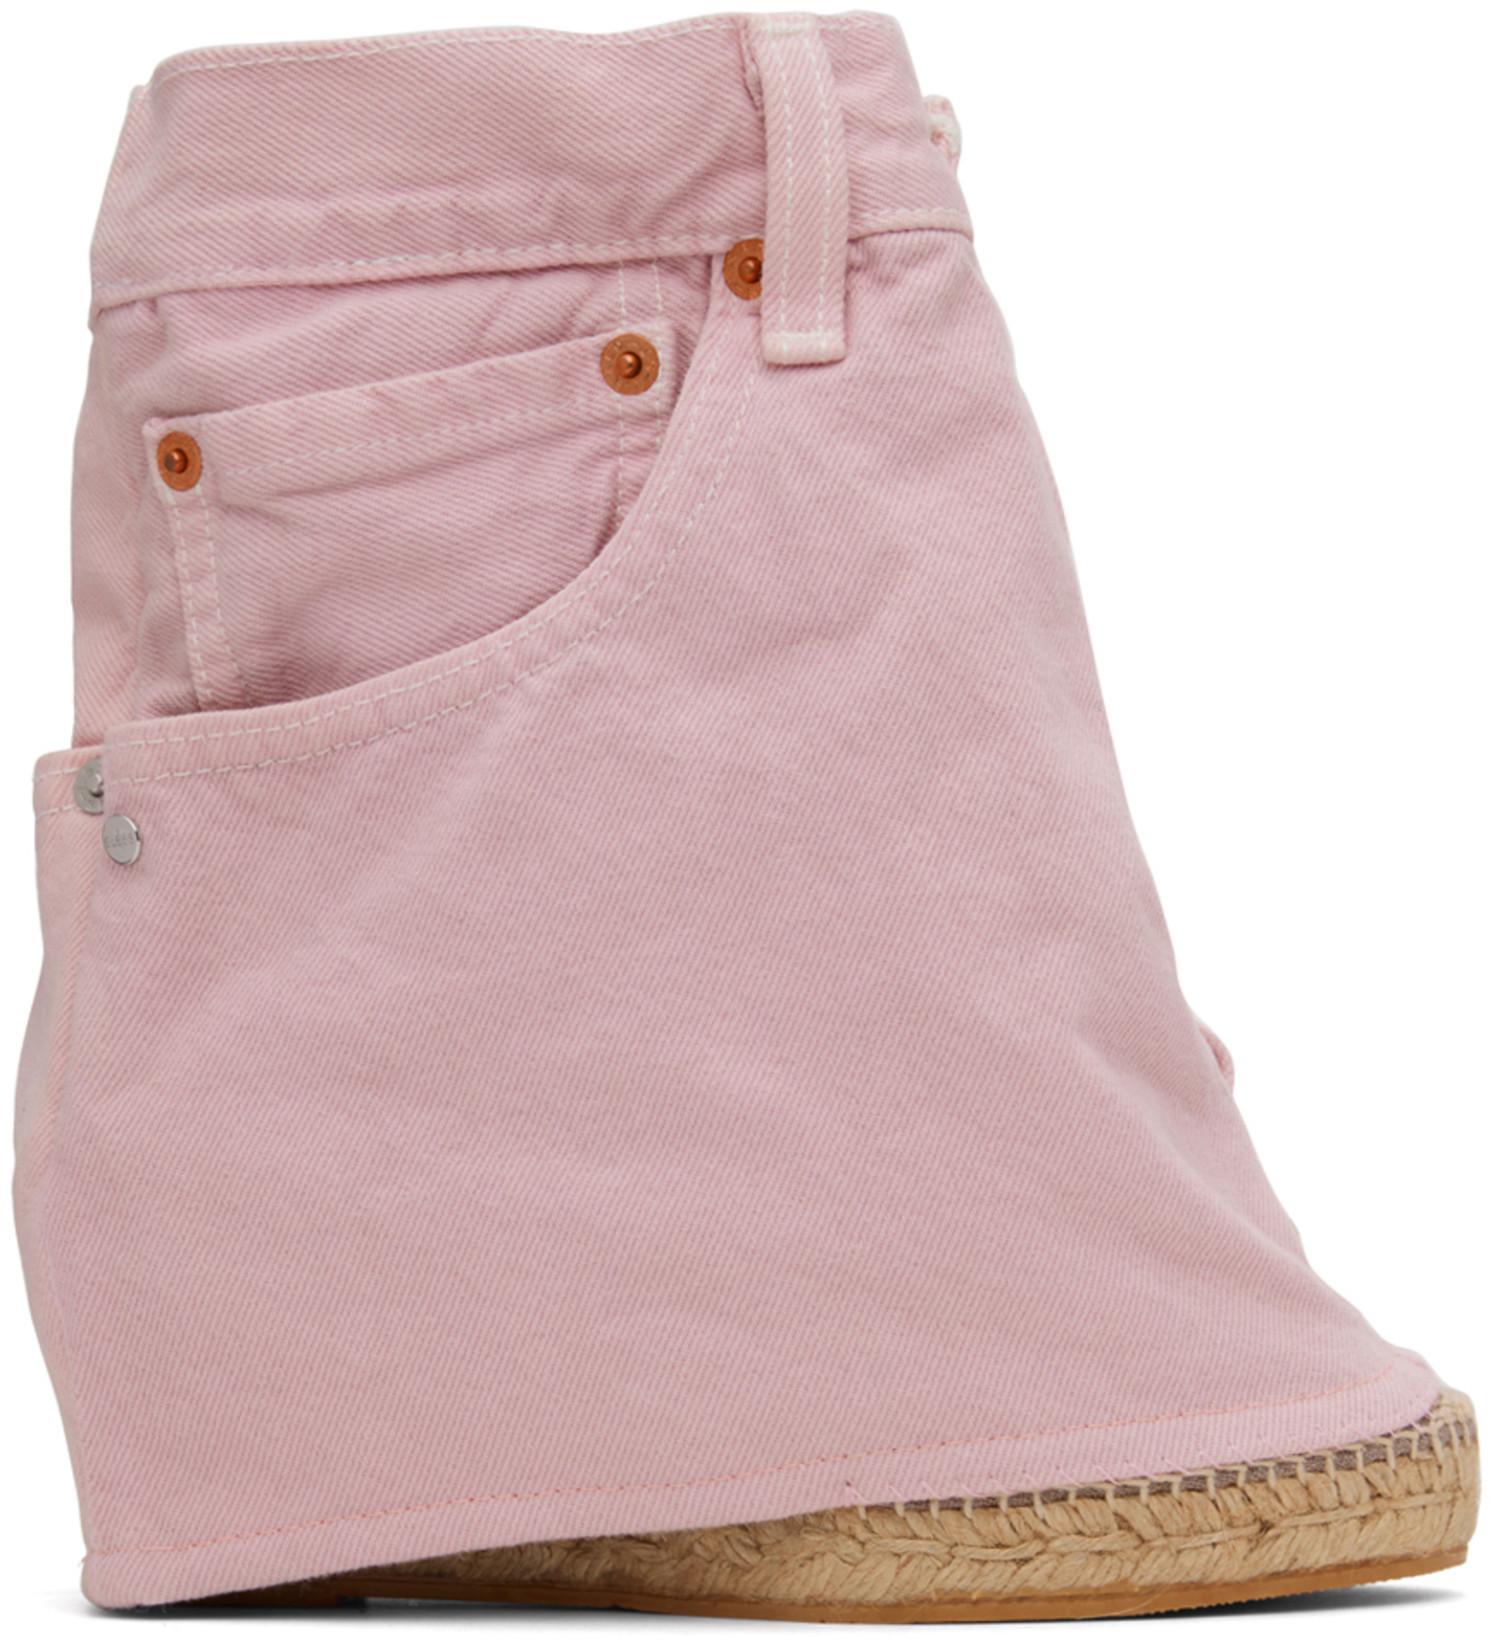 SSENSE Exclusive Pink Jeansheels Wedge Heels by BLESS